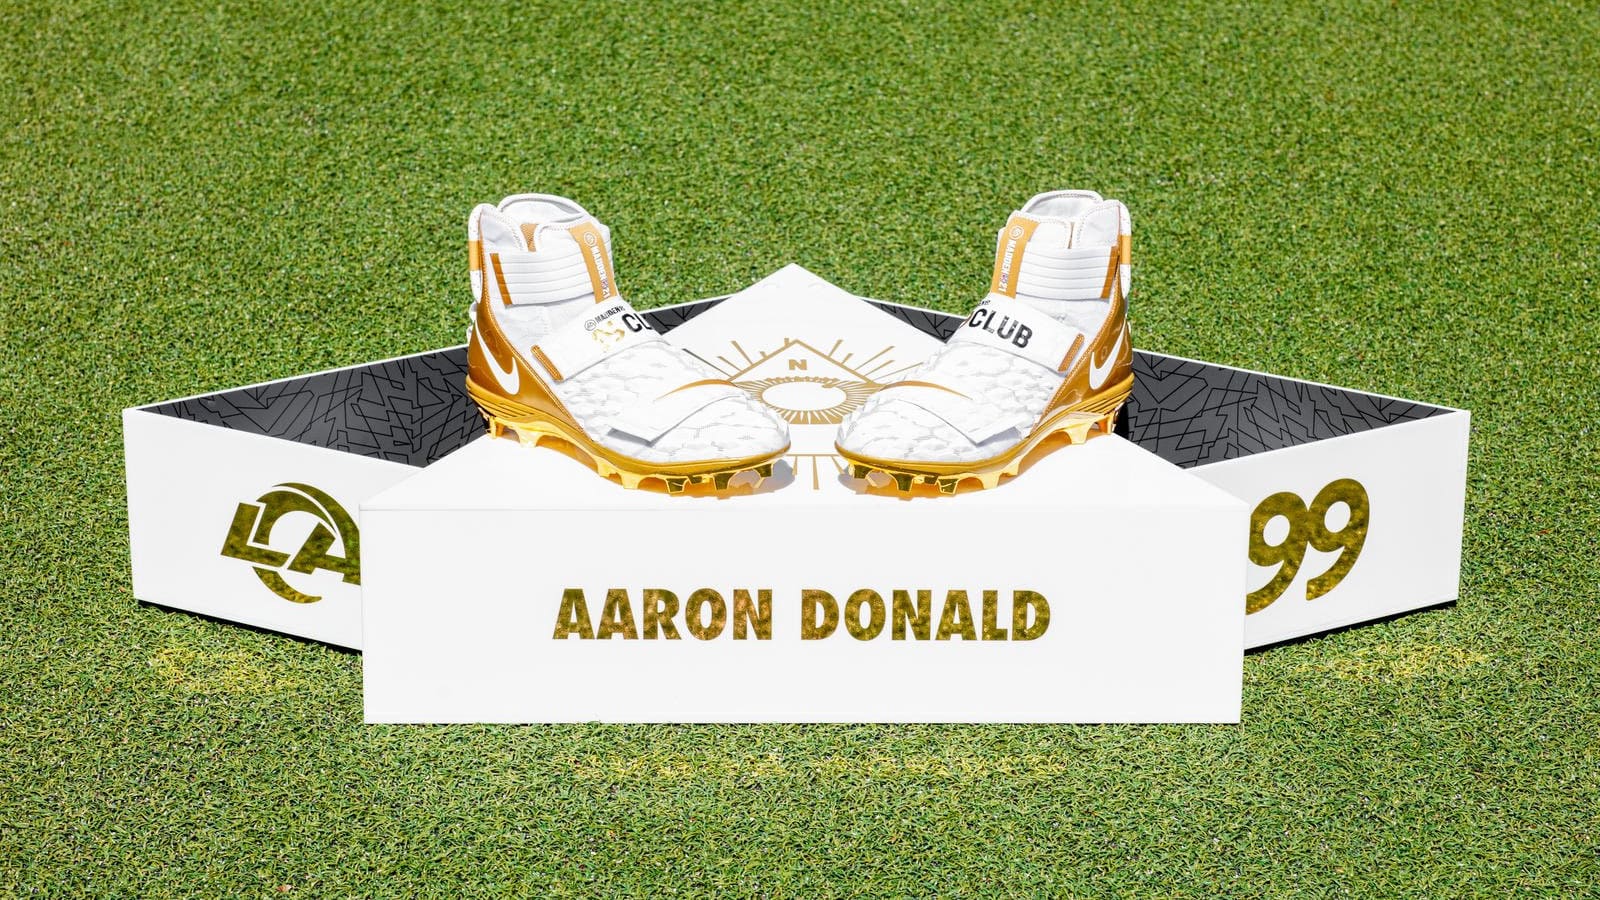 Aaron Donald Madden 99 Club Nike Cleats